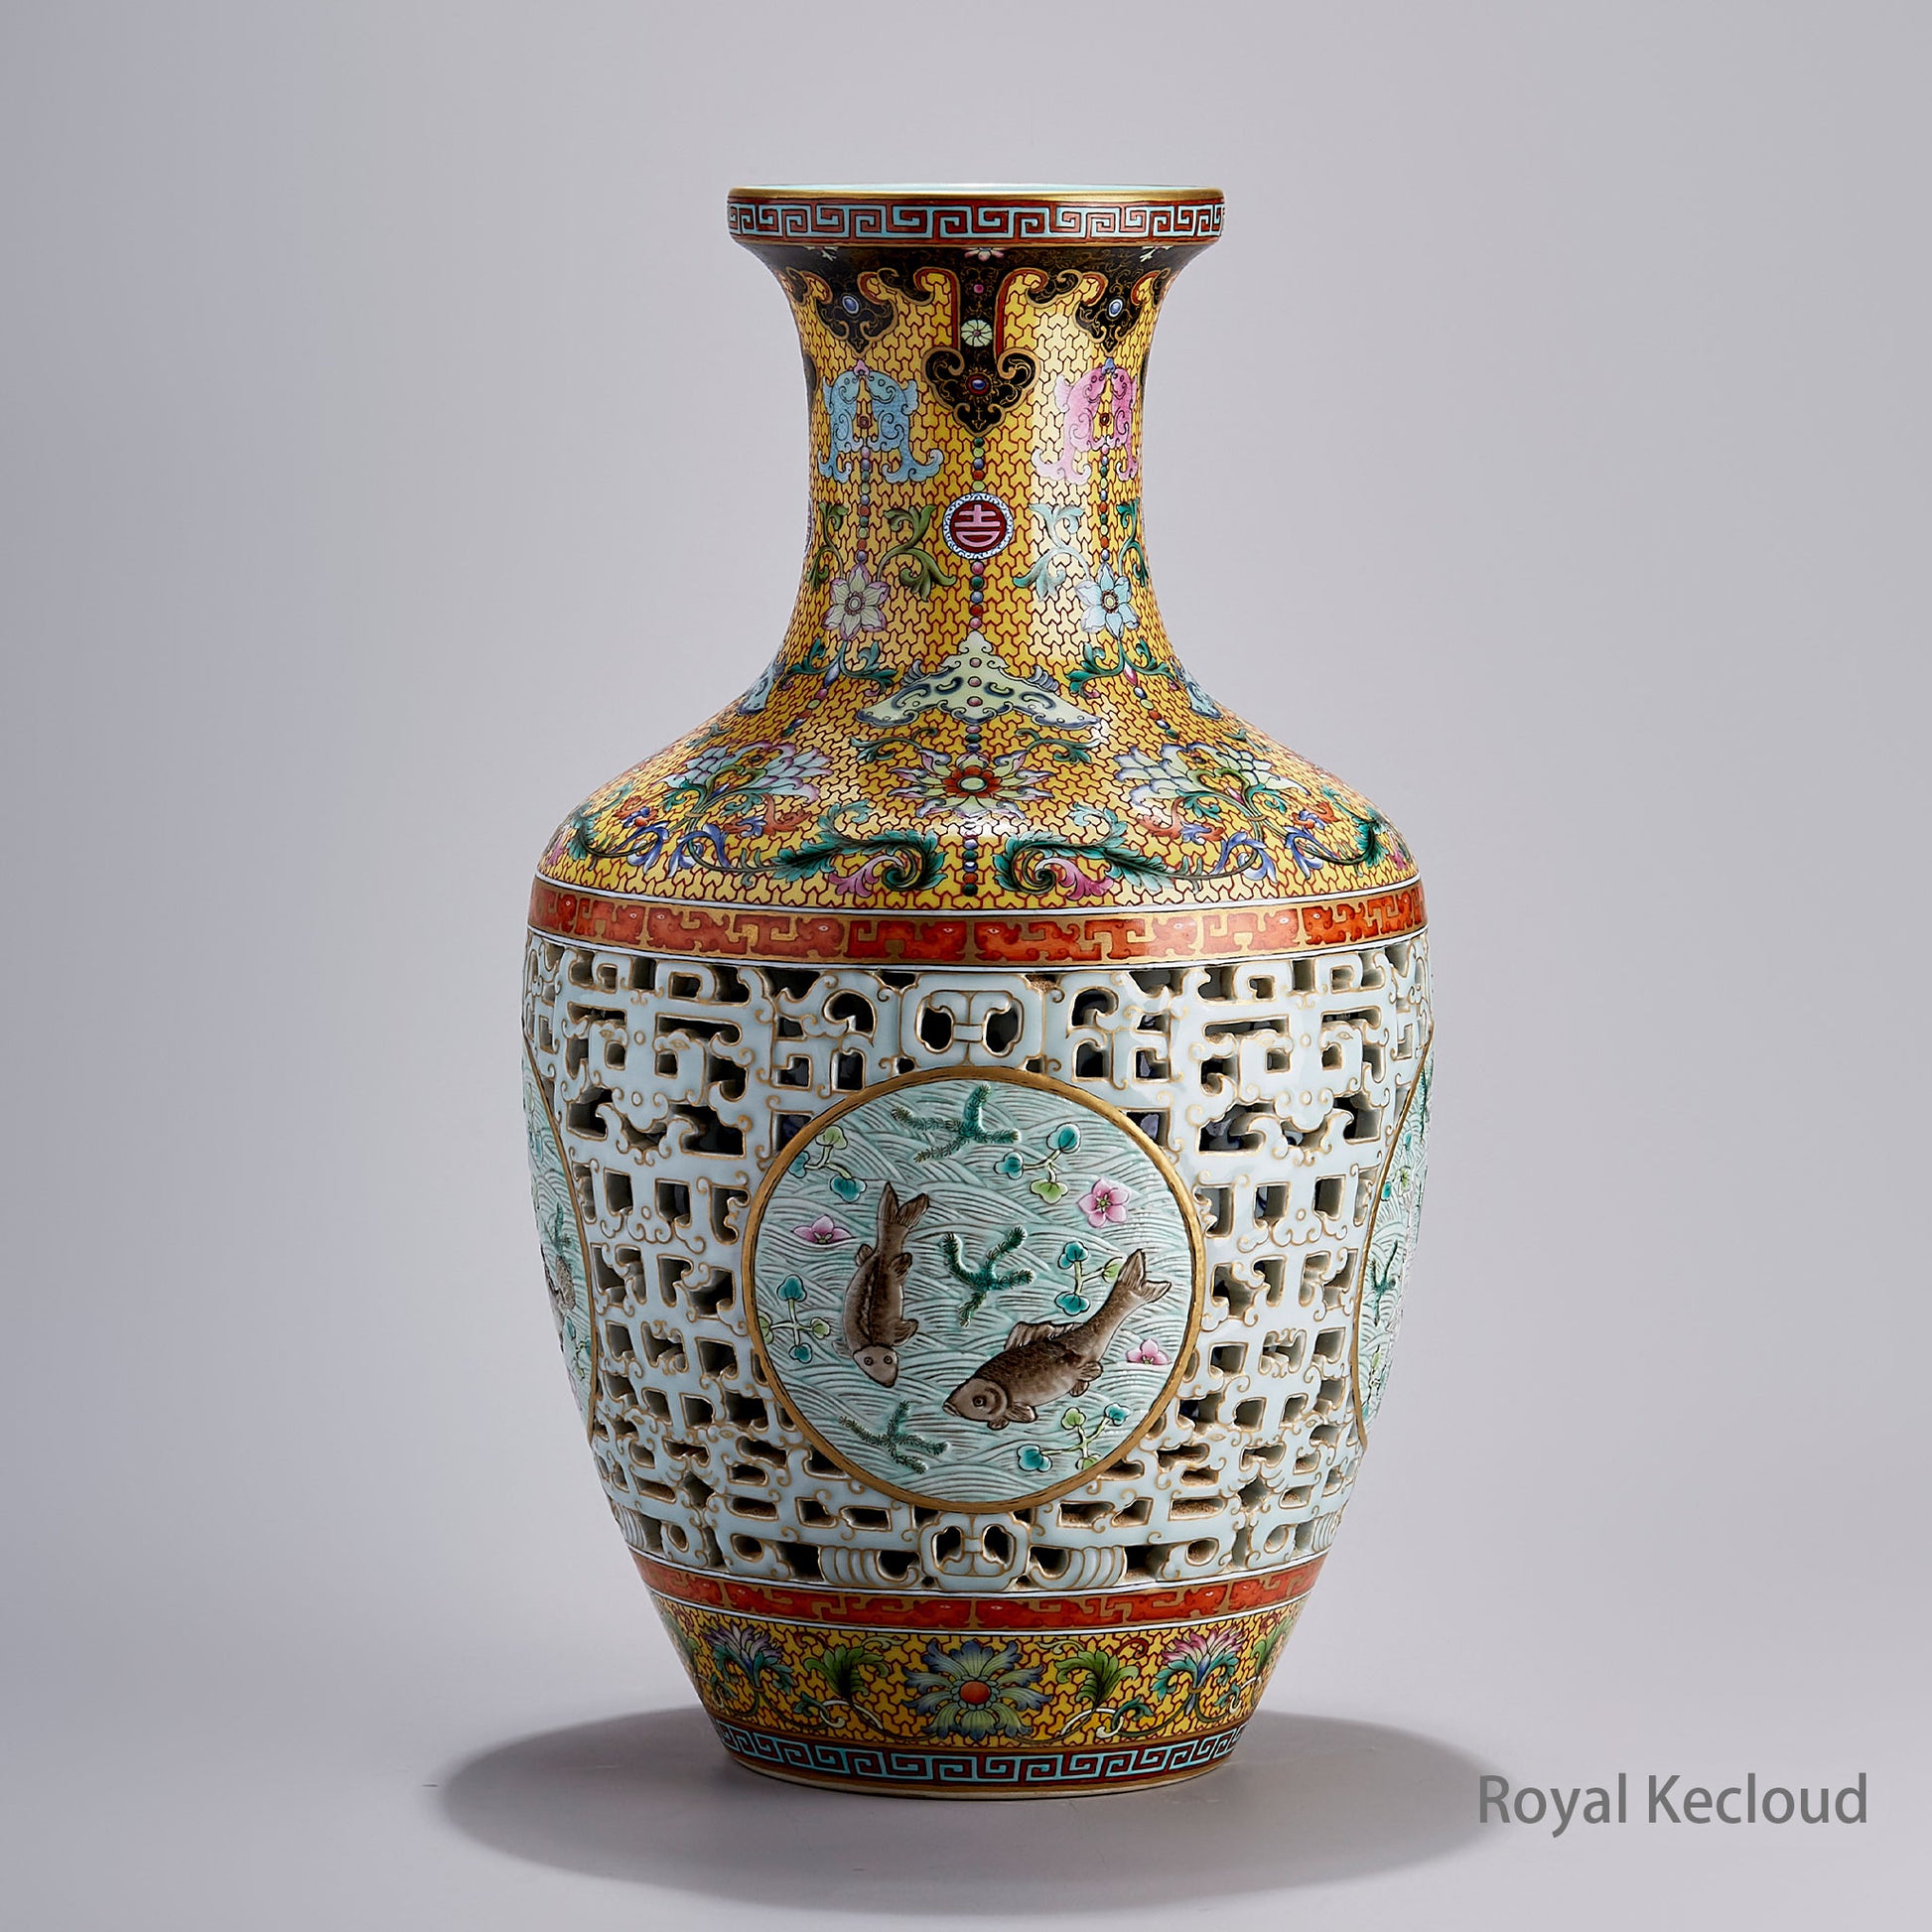 Jingdezhen Handmade Celadon-Glazed Reticulated Vase Decorated with Fish